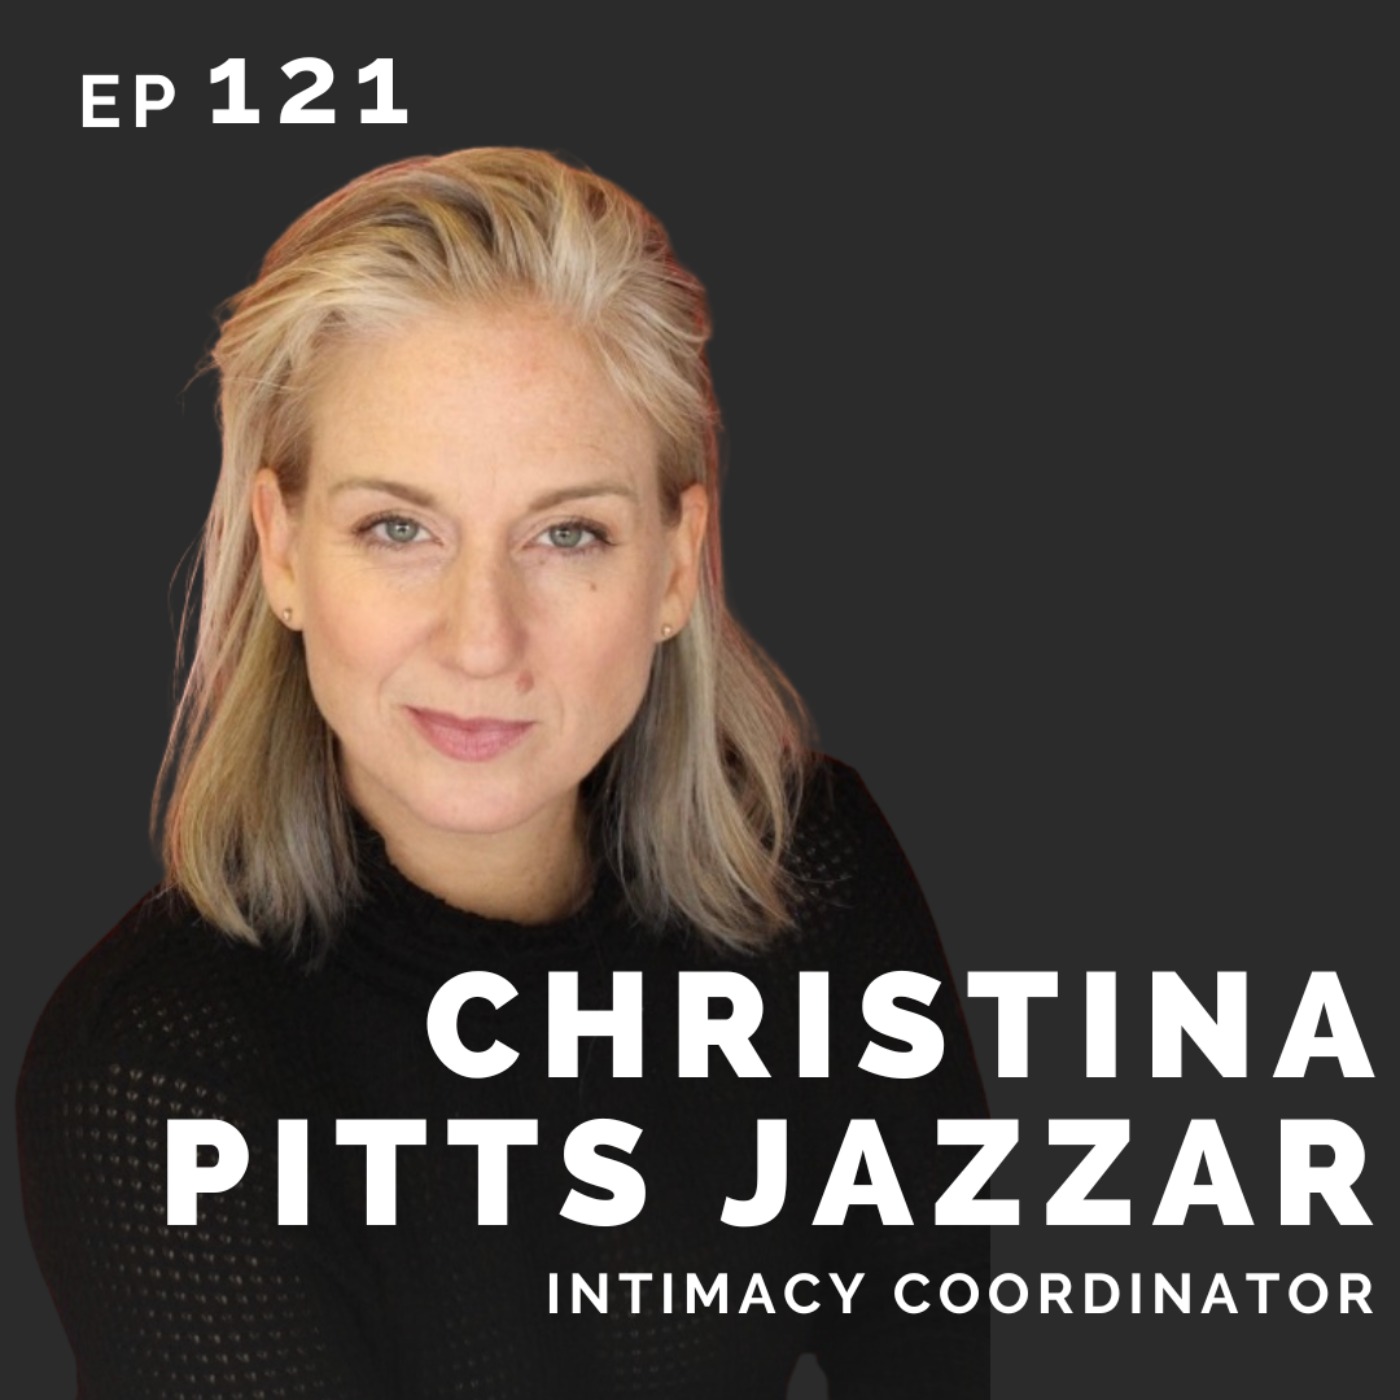 EP 121: Christina Pitts Jazzar: Intimacy Coordinator